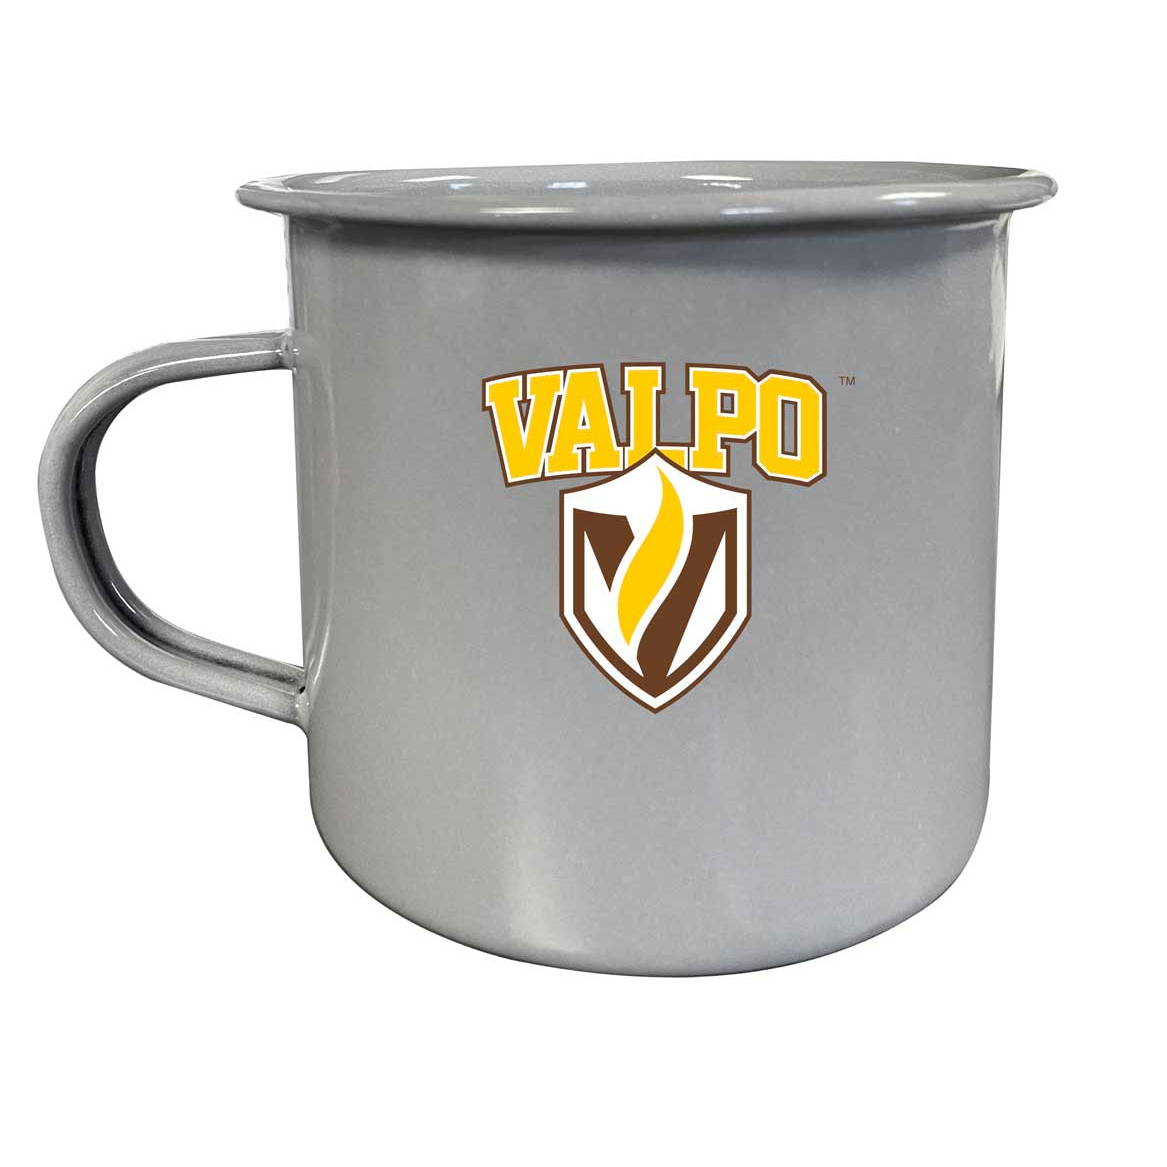 Valparaiso University Tin Camper Coffee Mug - Choose Your Color - White